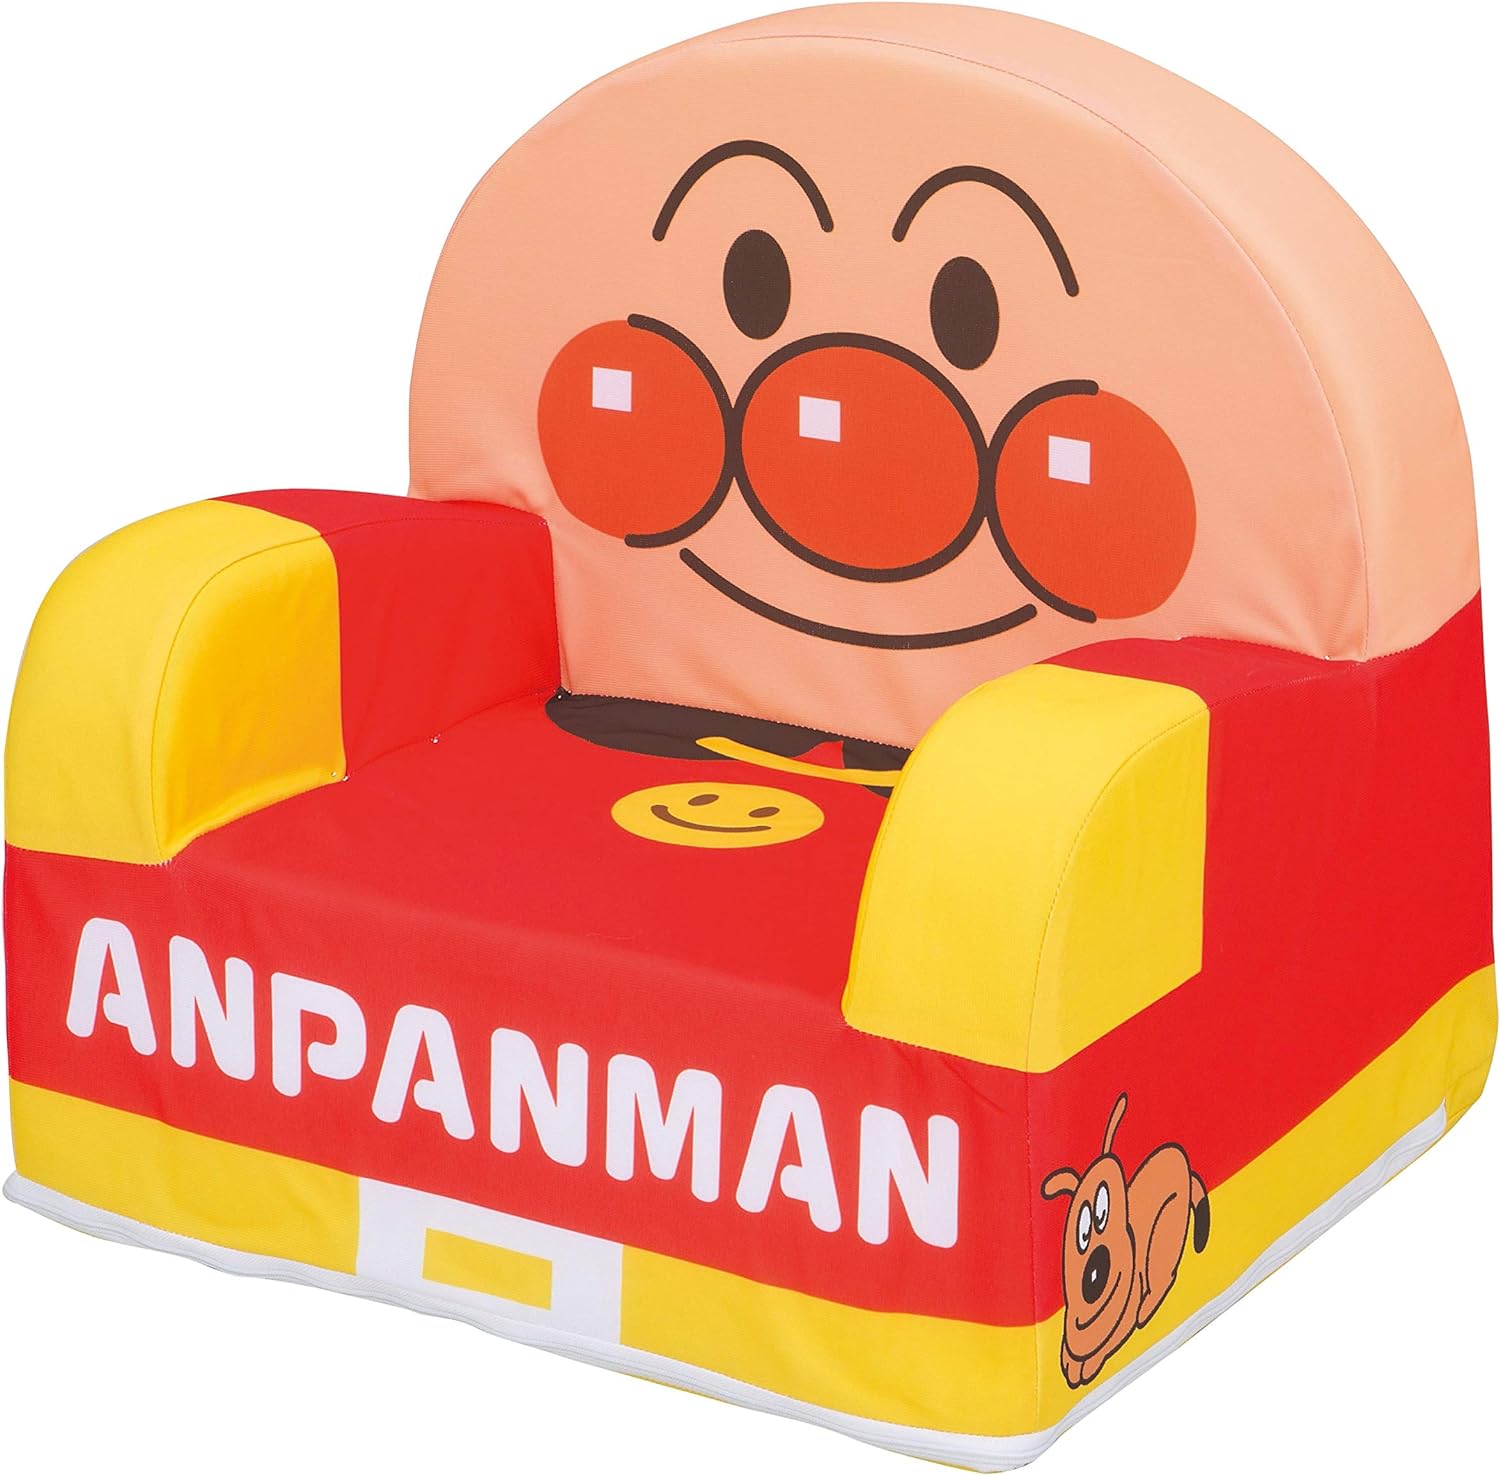 Anpanman Soft Kids Sofa Popular Character